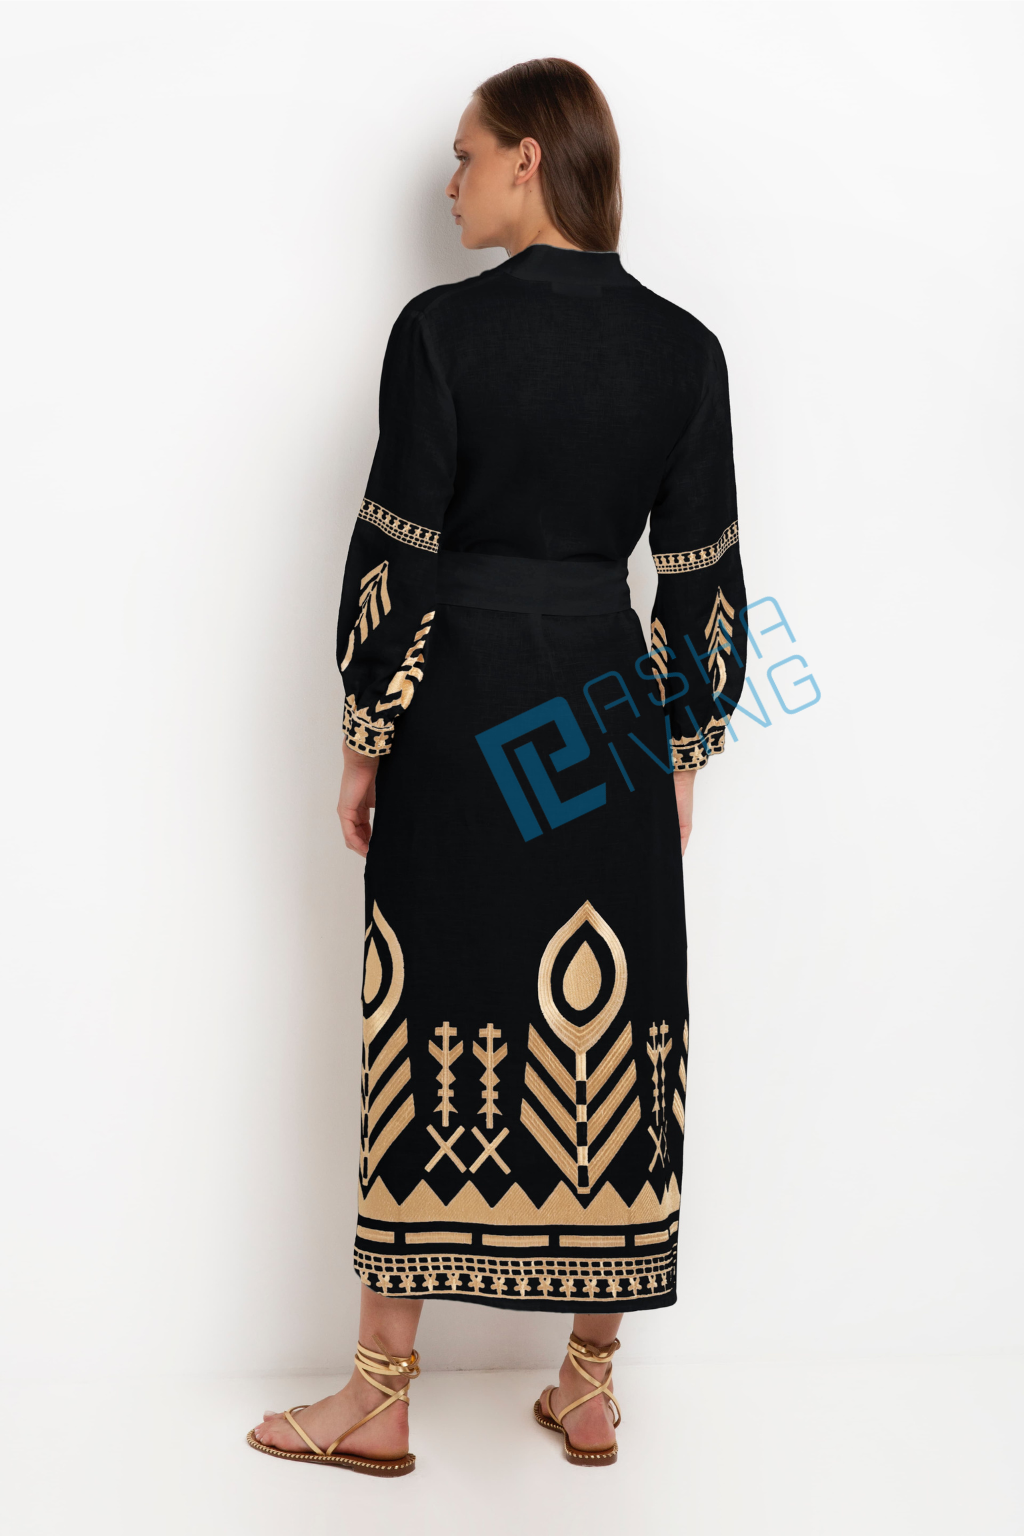 Pasha Living Greek Archaic Kori Black and Gold dress UK